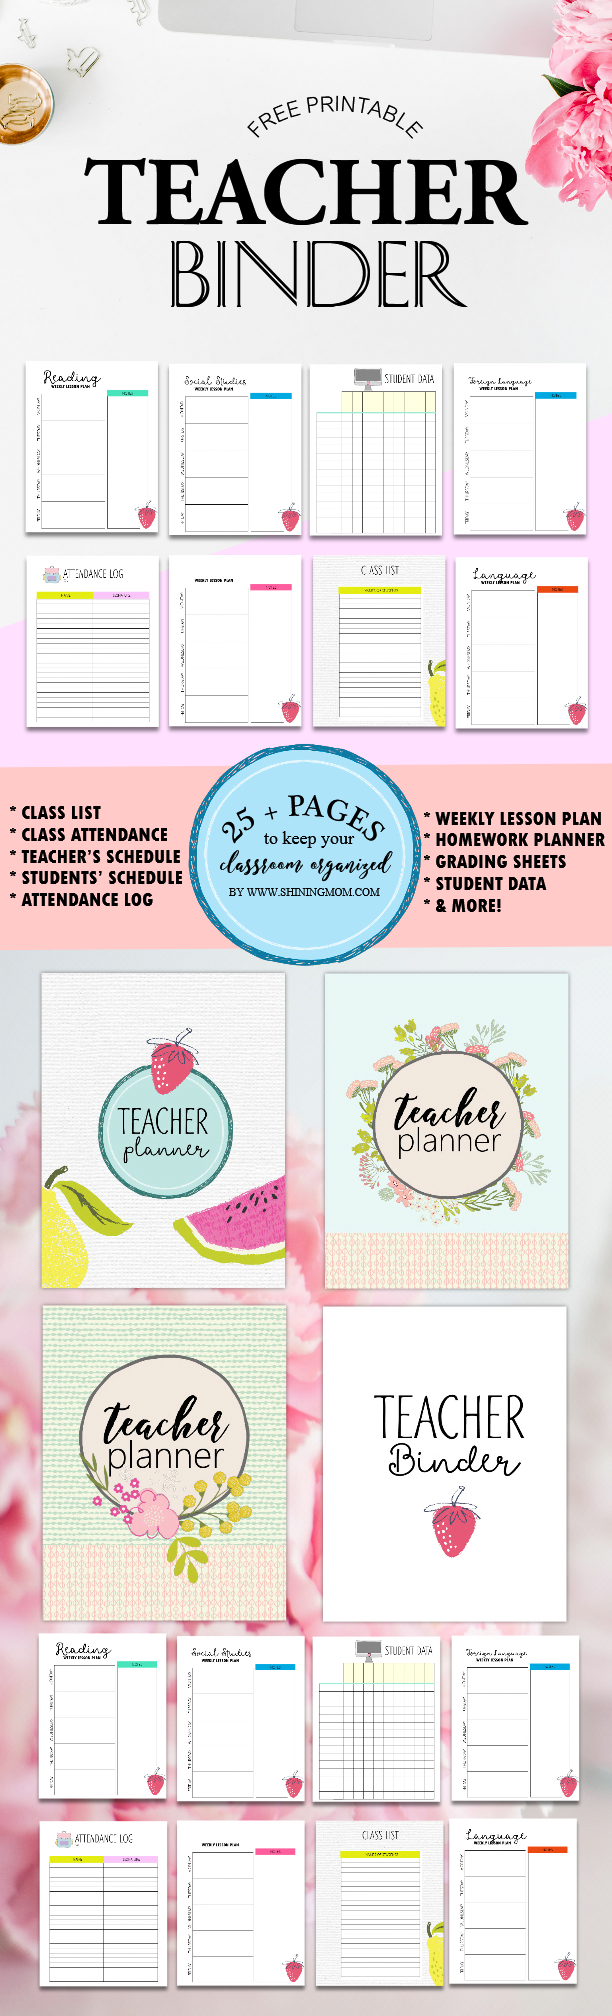 Free Teacher Binder Printables: Over 25 Pretty Planning Templates! - Free Printable Teacher Planner Pages